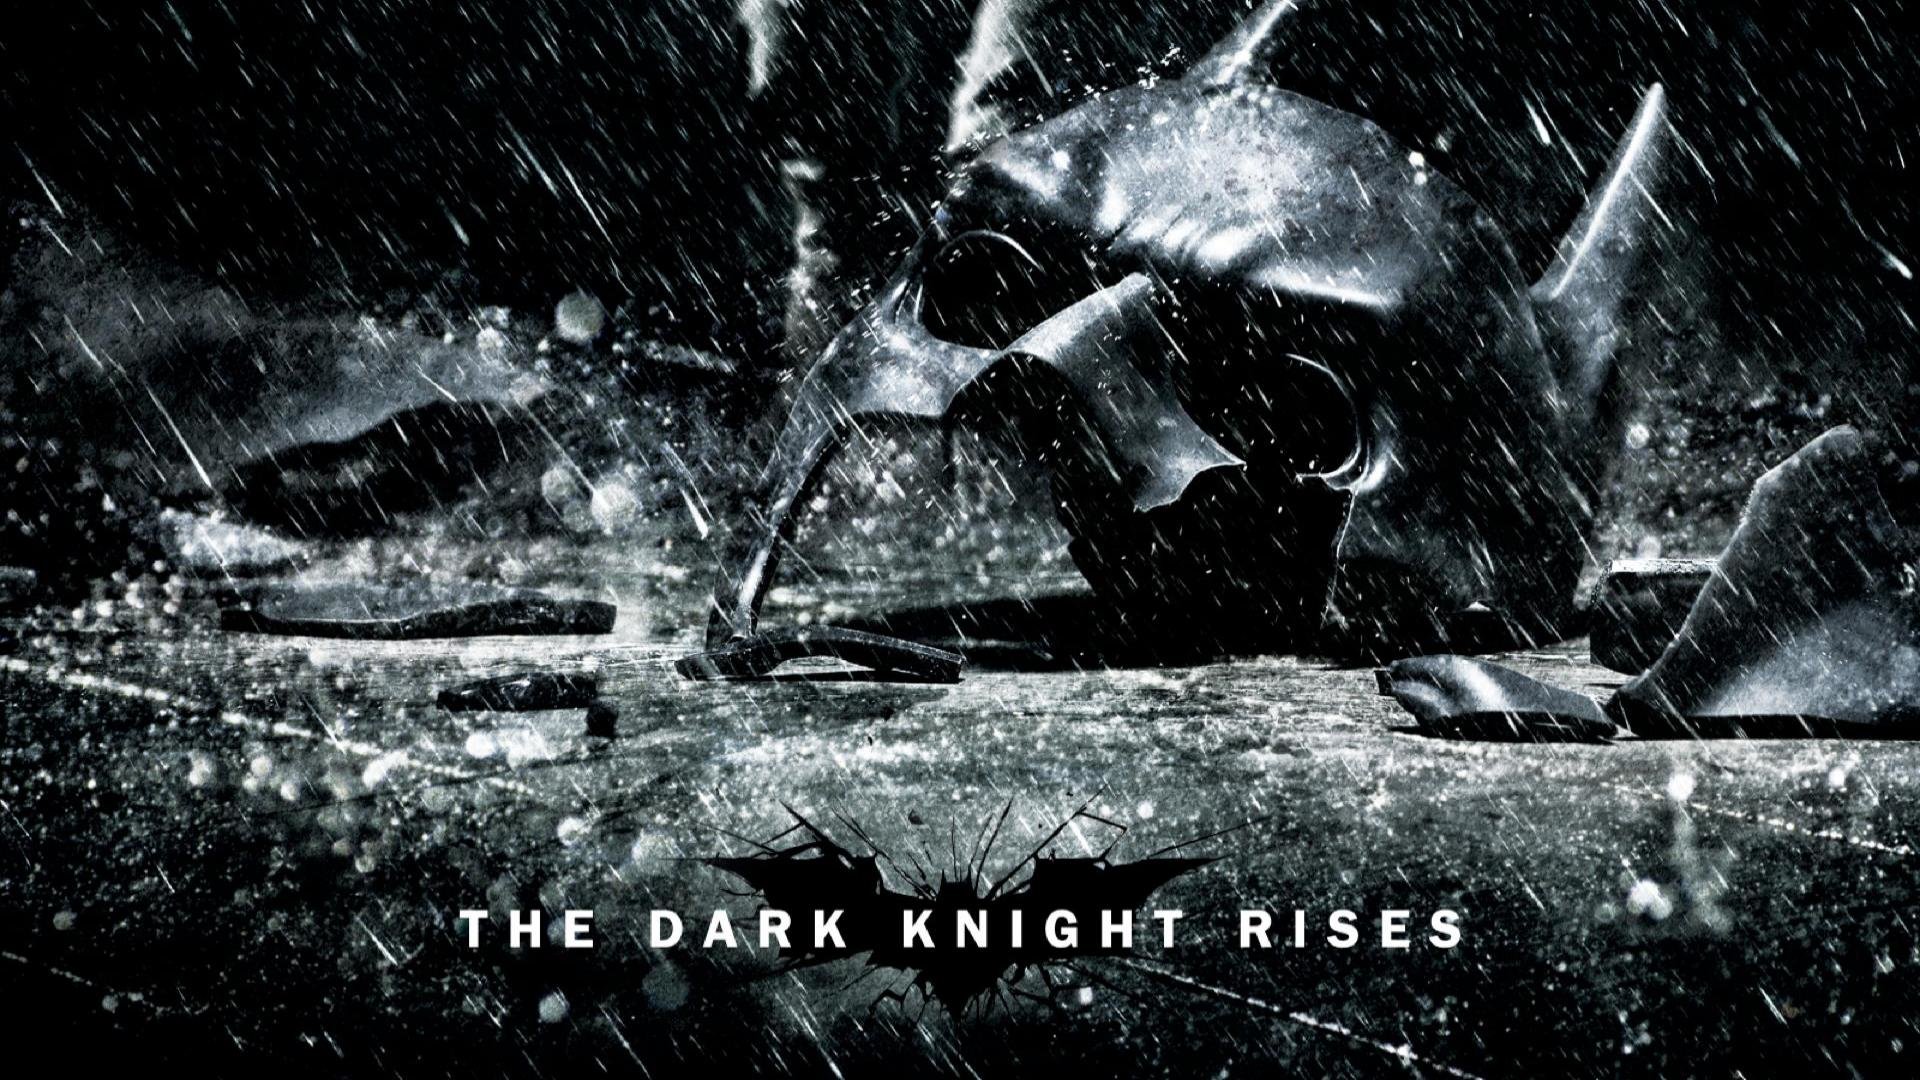 High resolution The Dark Knight Rises full hd 1920x1080 background ID:161403 for desktop